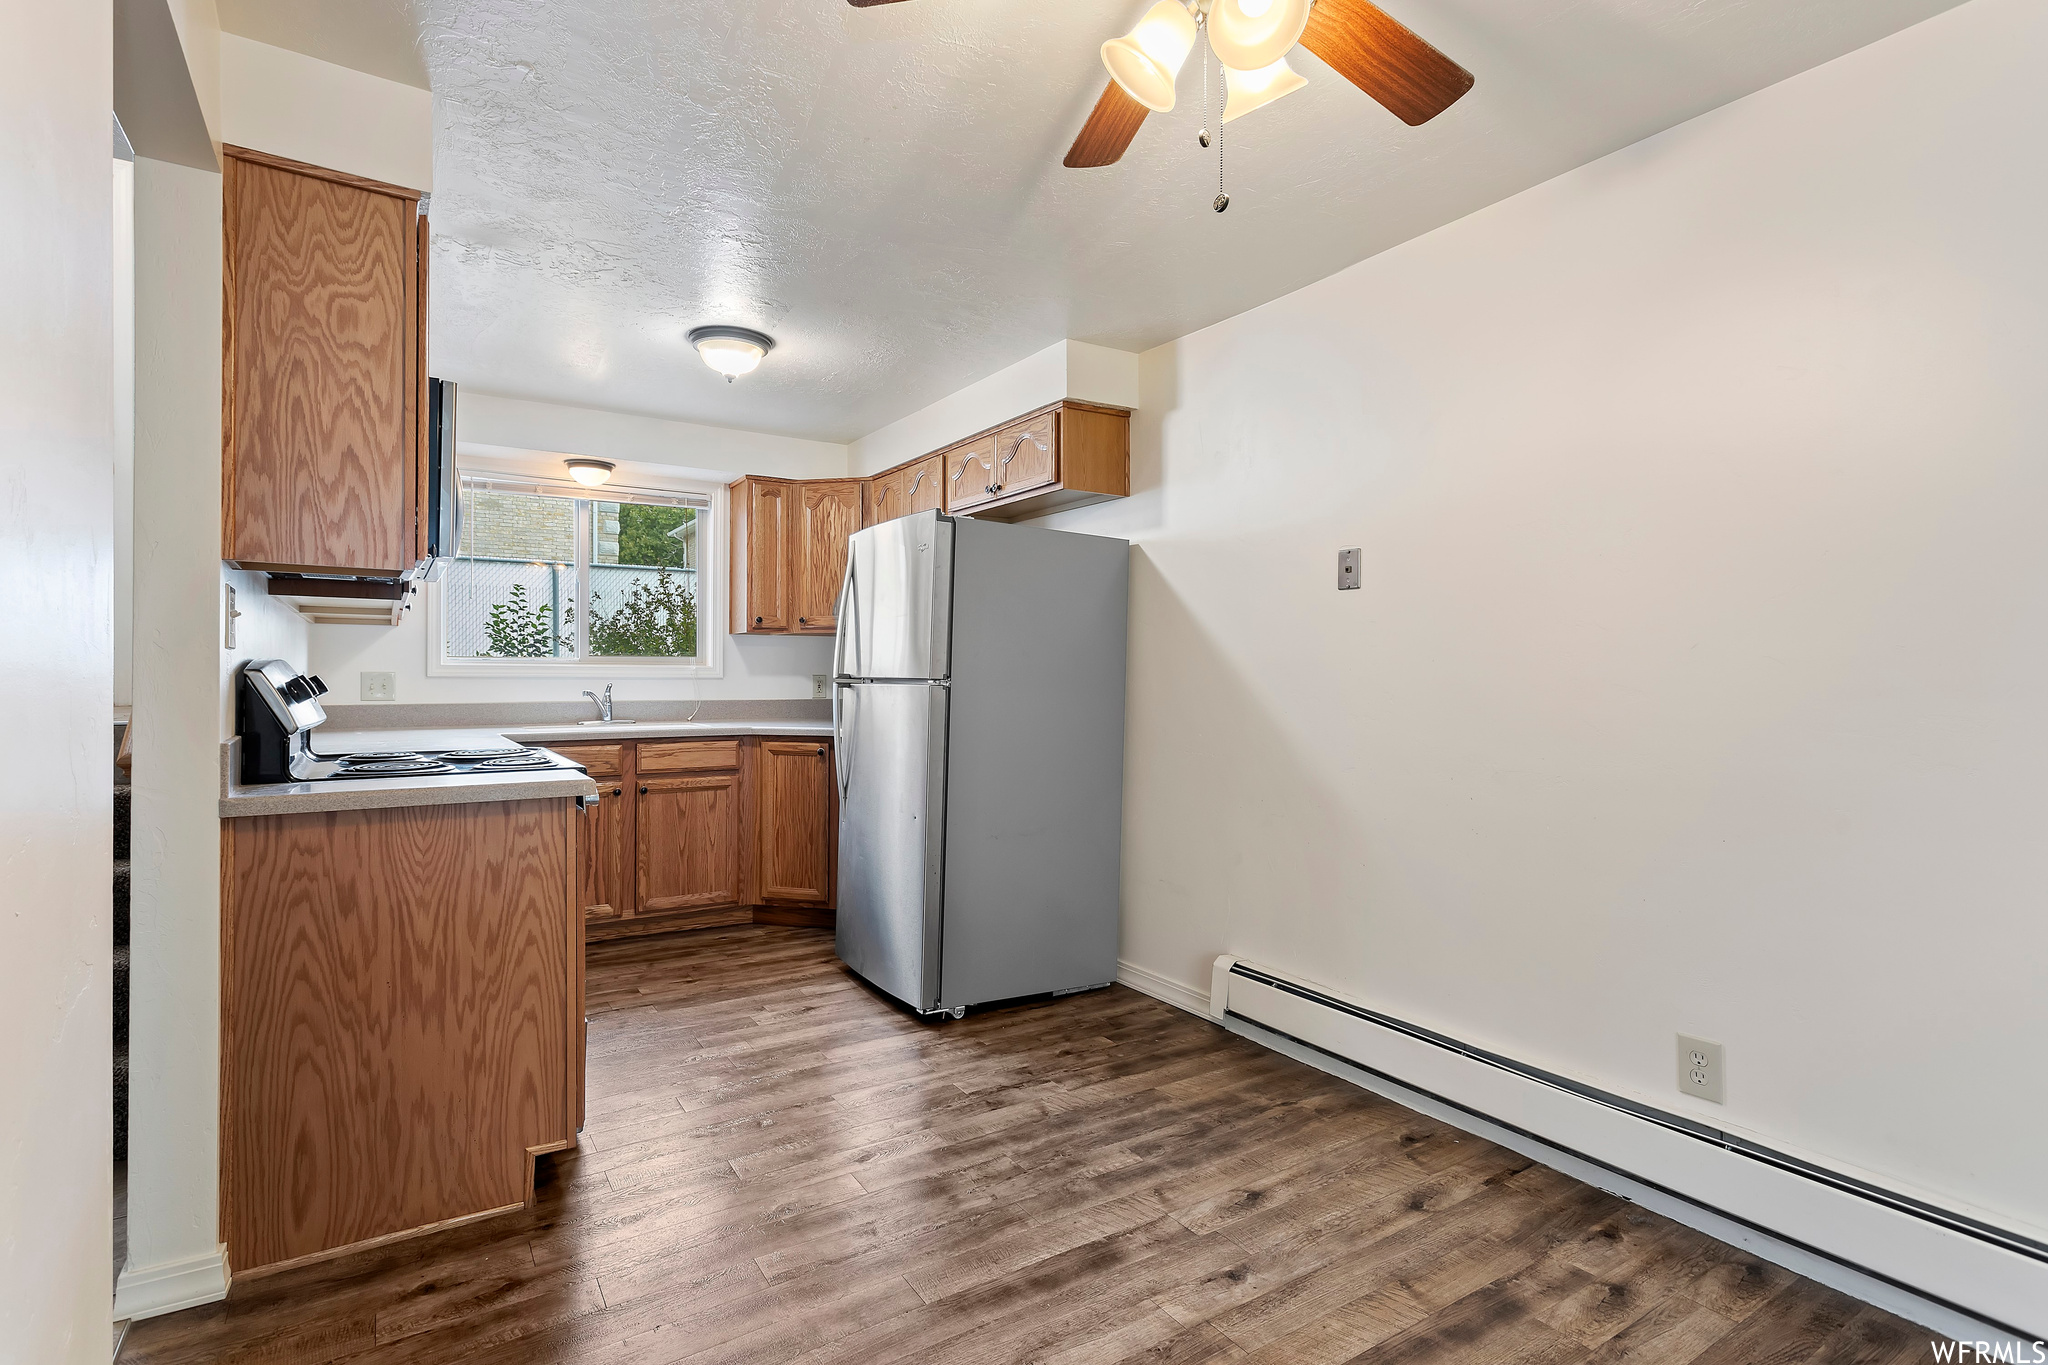 Kitchen featuring a baseboard heating unit, range, ceiling fan, stainless steel fridge, and dark hardwood / wood-style floors